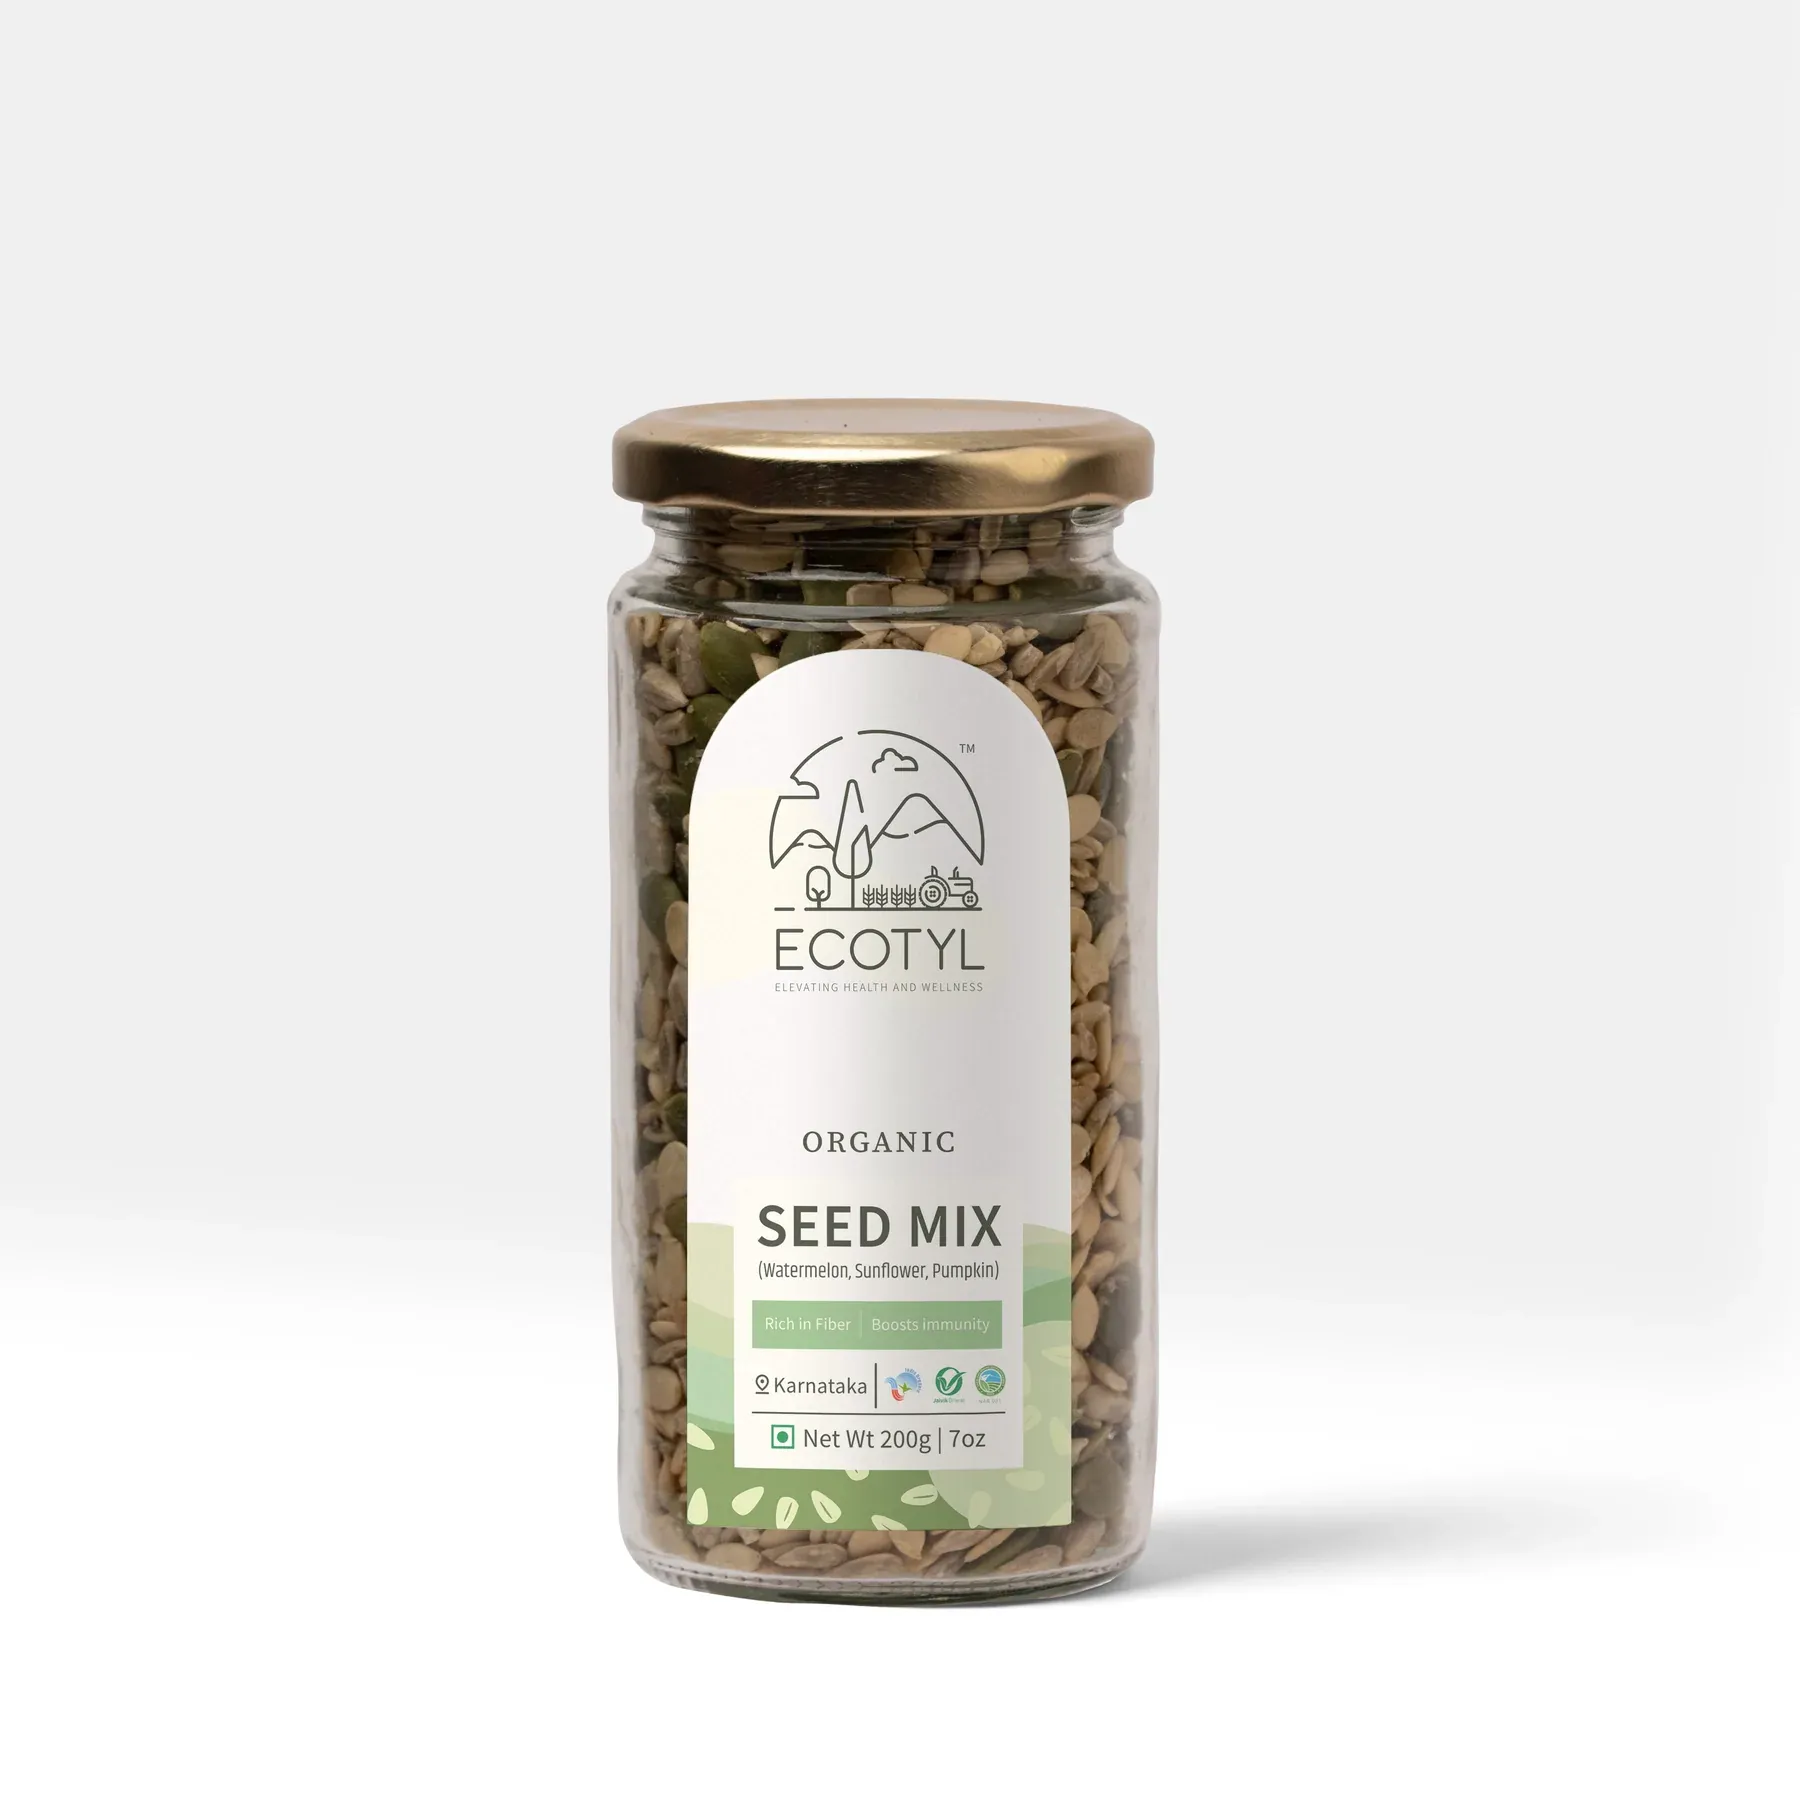 Ecotyl Organic Seed Mix Image